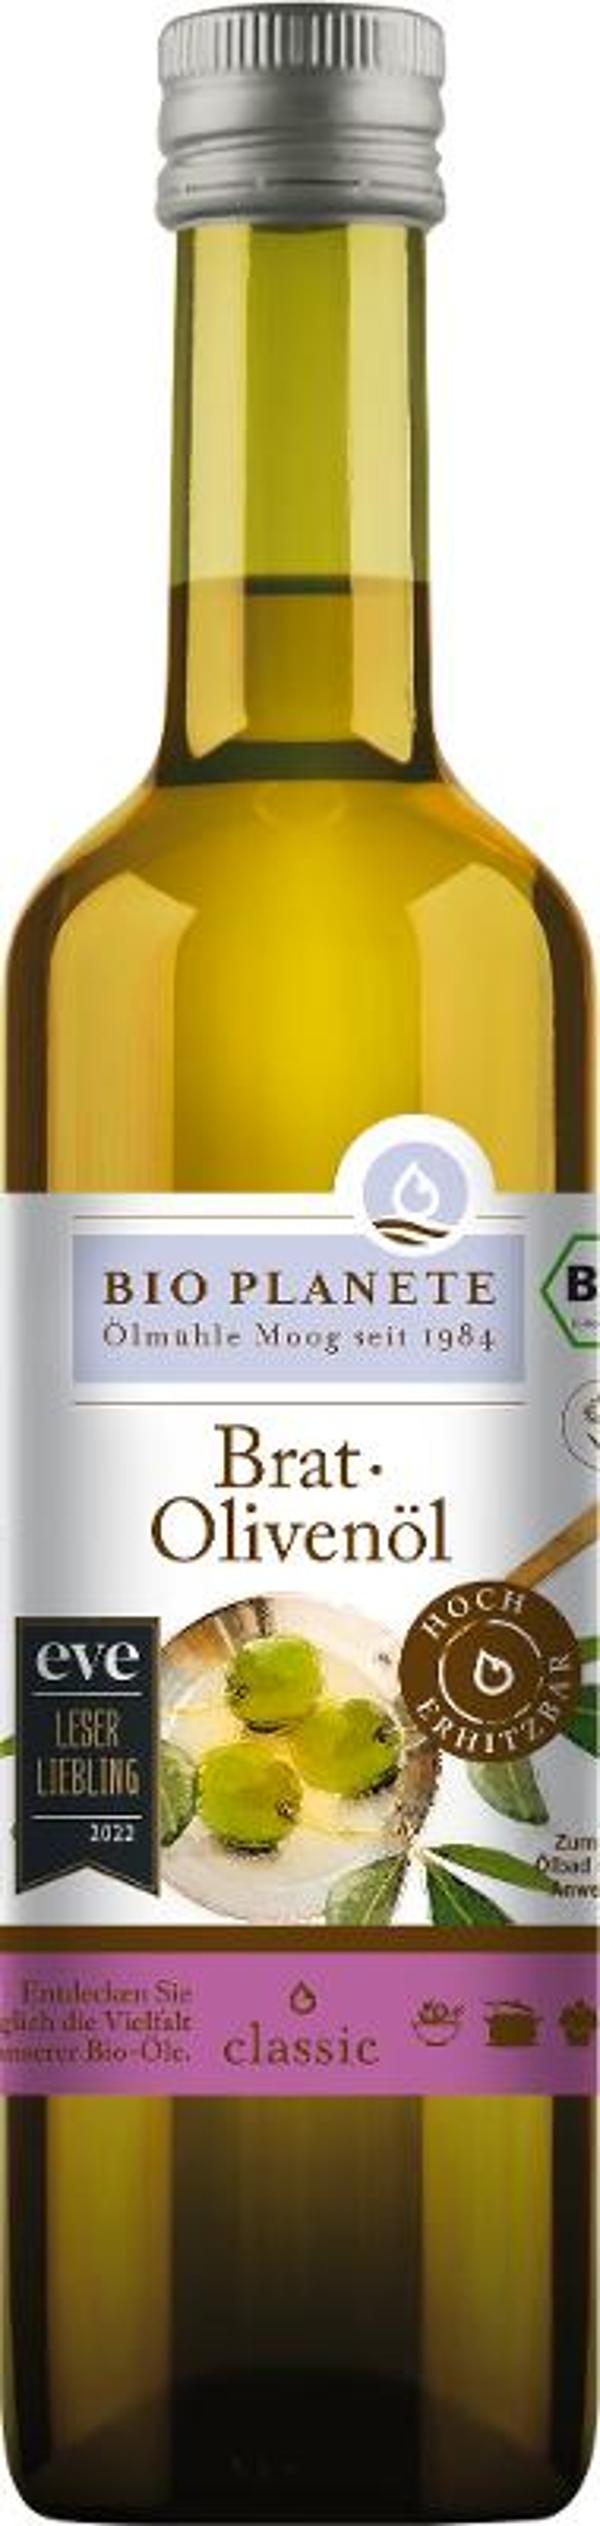 Produktfoto zu Brat-Olivenöl, 500ml